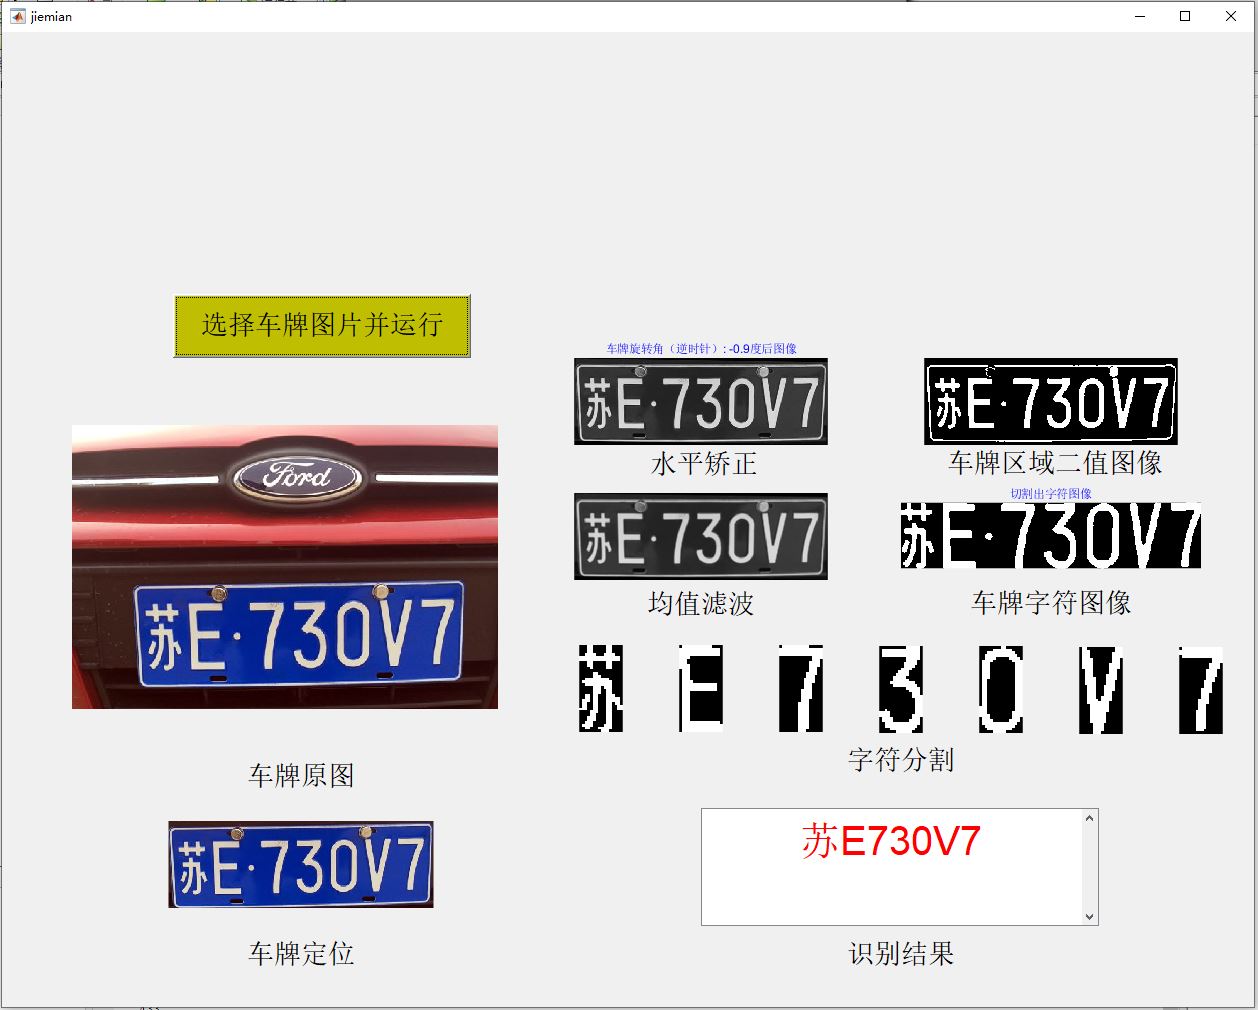 【B94】基于Matlab编写的车牌识别系统(GUI界面)